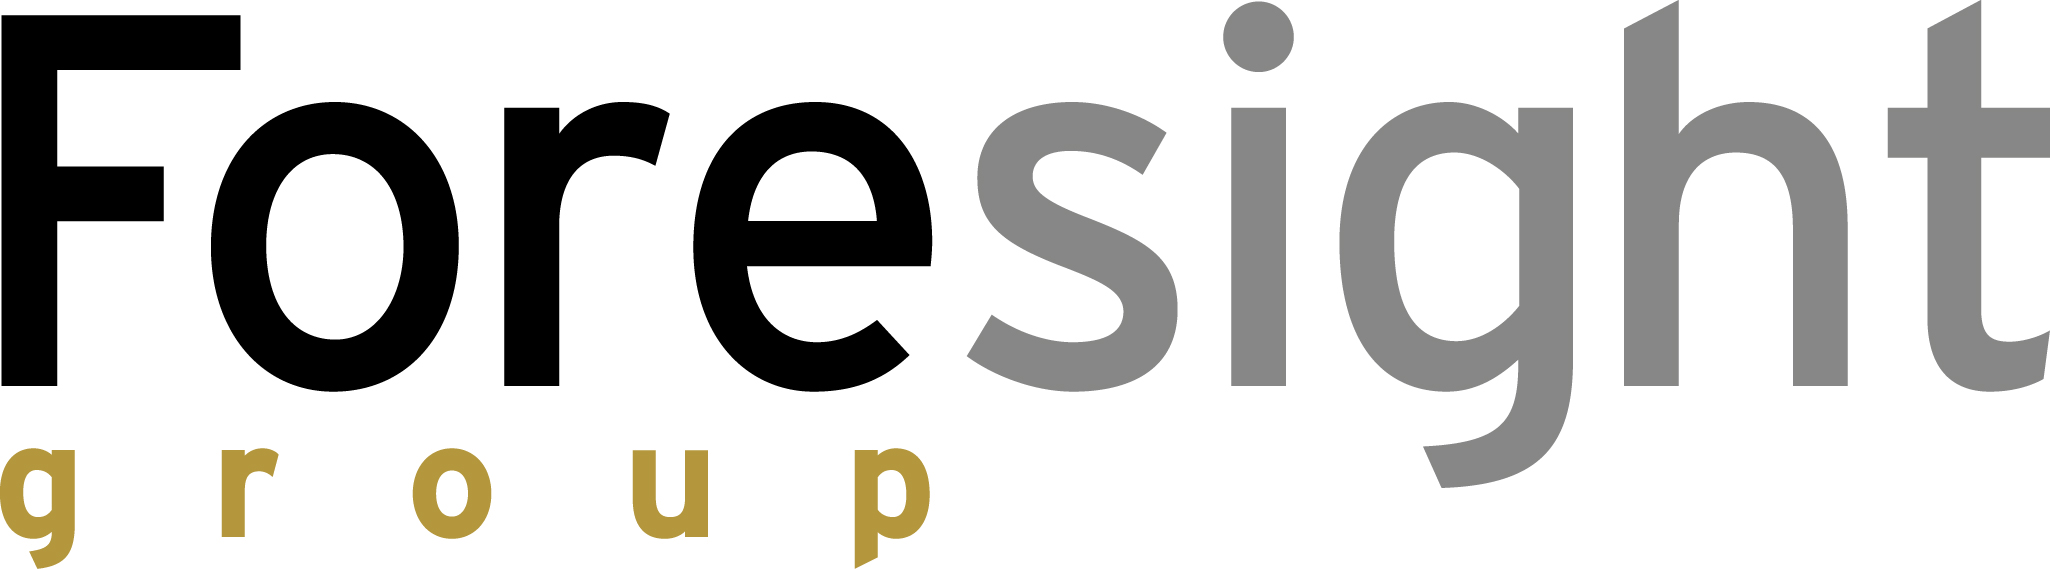 Foresight Logo - Foresight group logo - positive - LREL